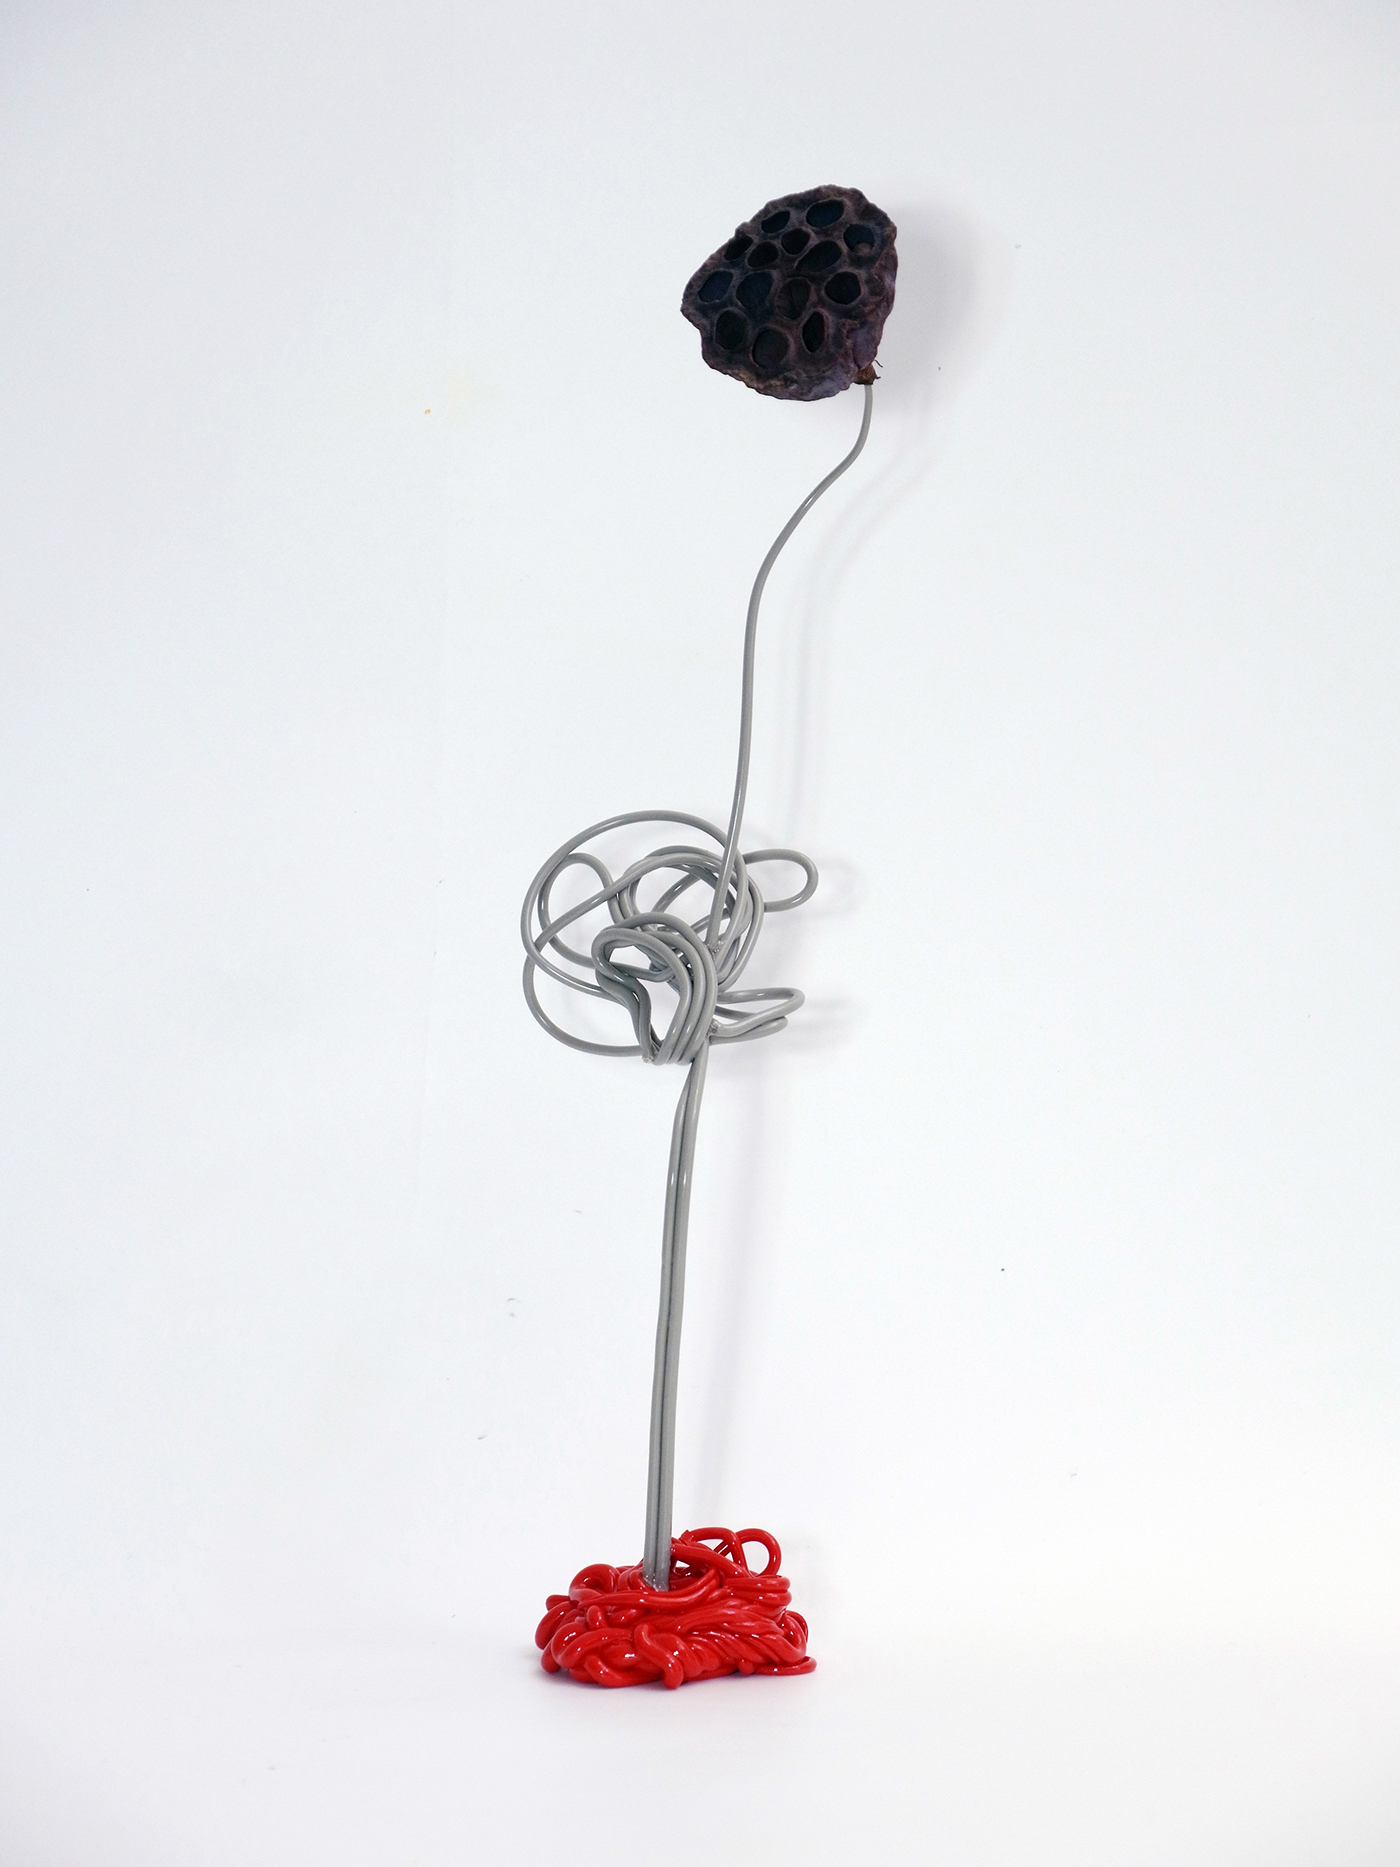 future flower garbage sculpture FINEART contemporaryart object dryflower trash reproduction